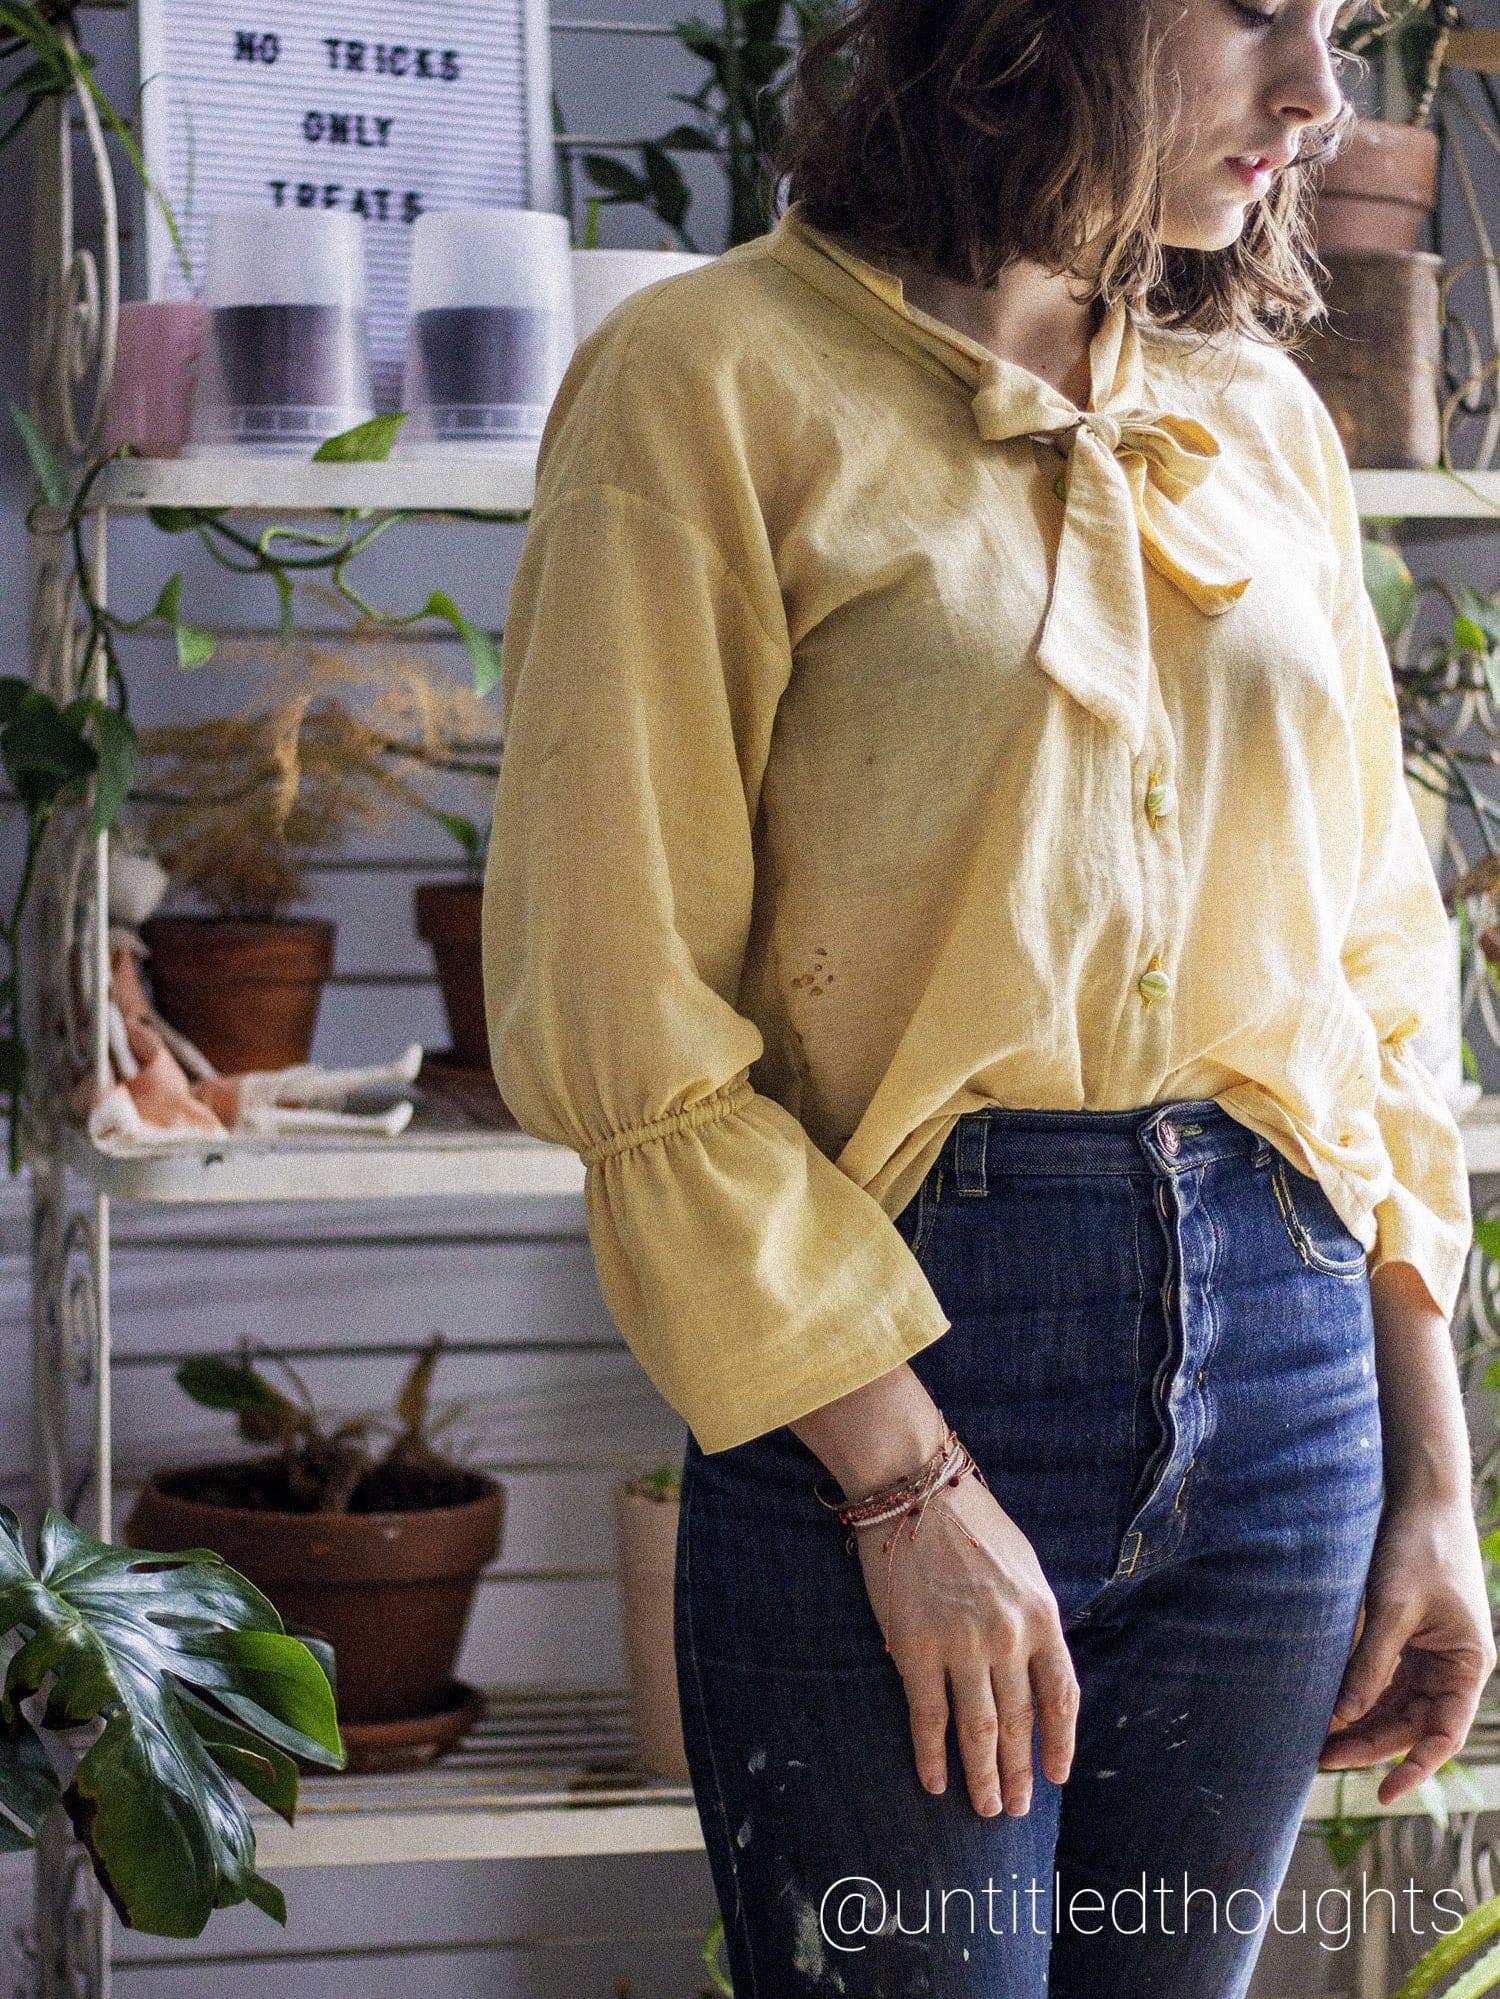 Chalk French Linen Seam Detail Blouse - Women's Linen Shirts